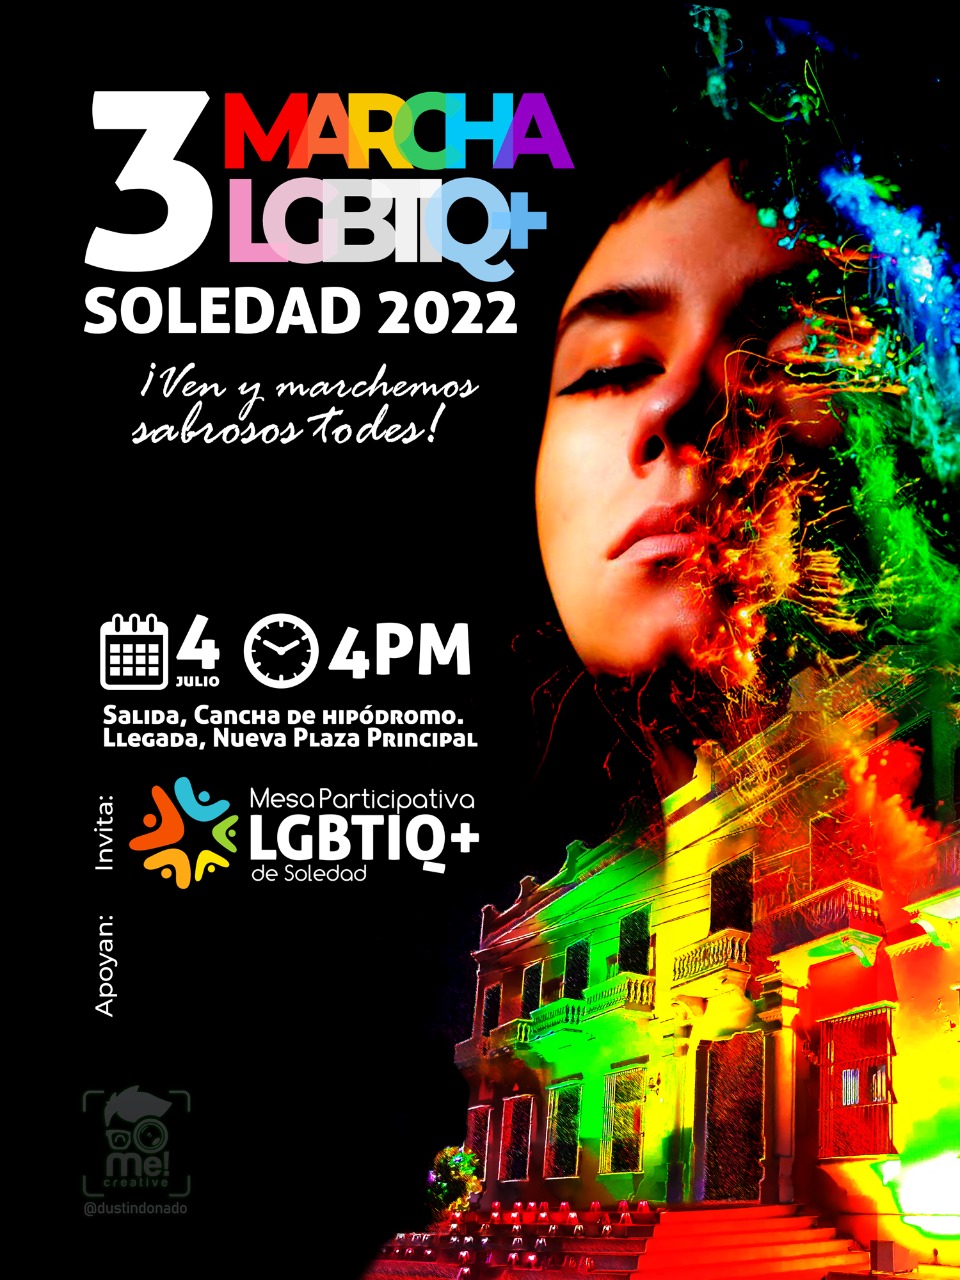  3 Marcha LGBTIQ+ Soledad 2022 [SOLEDAD] 